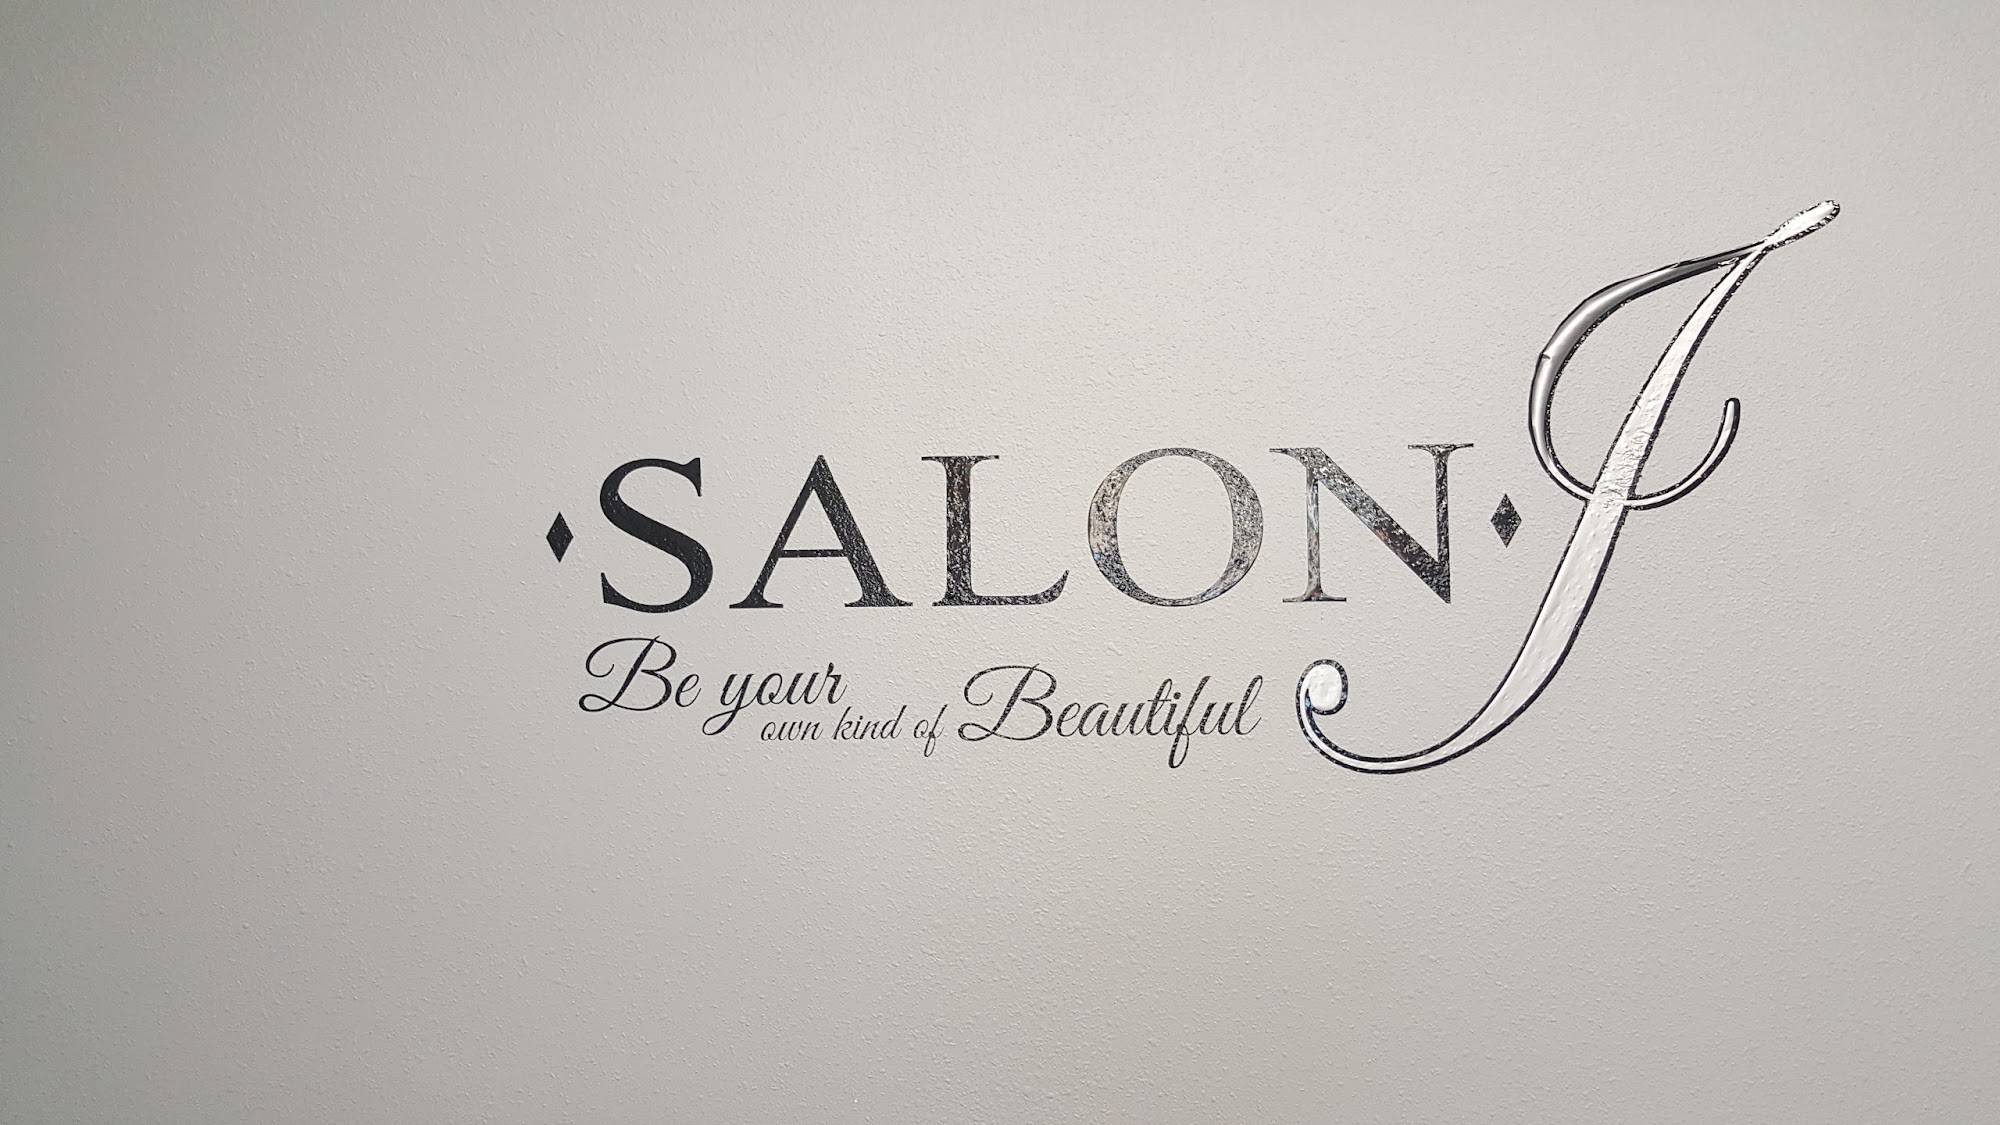 Salon J Spa and Boutique 180 Progress Cir, Spicer Minnesota 56288